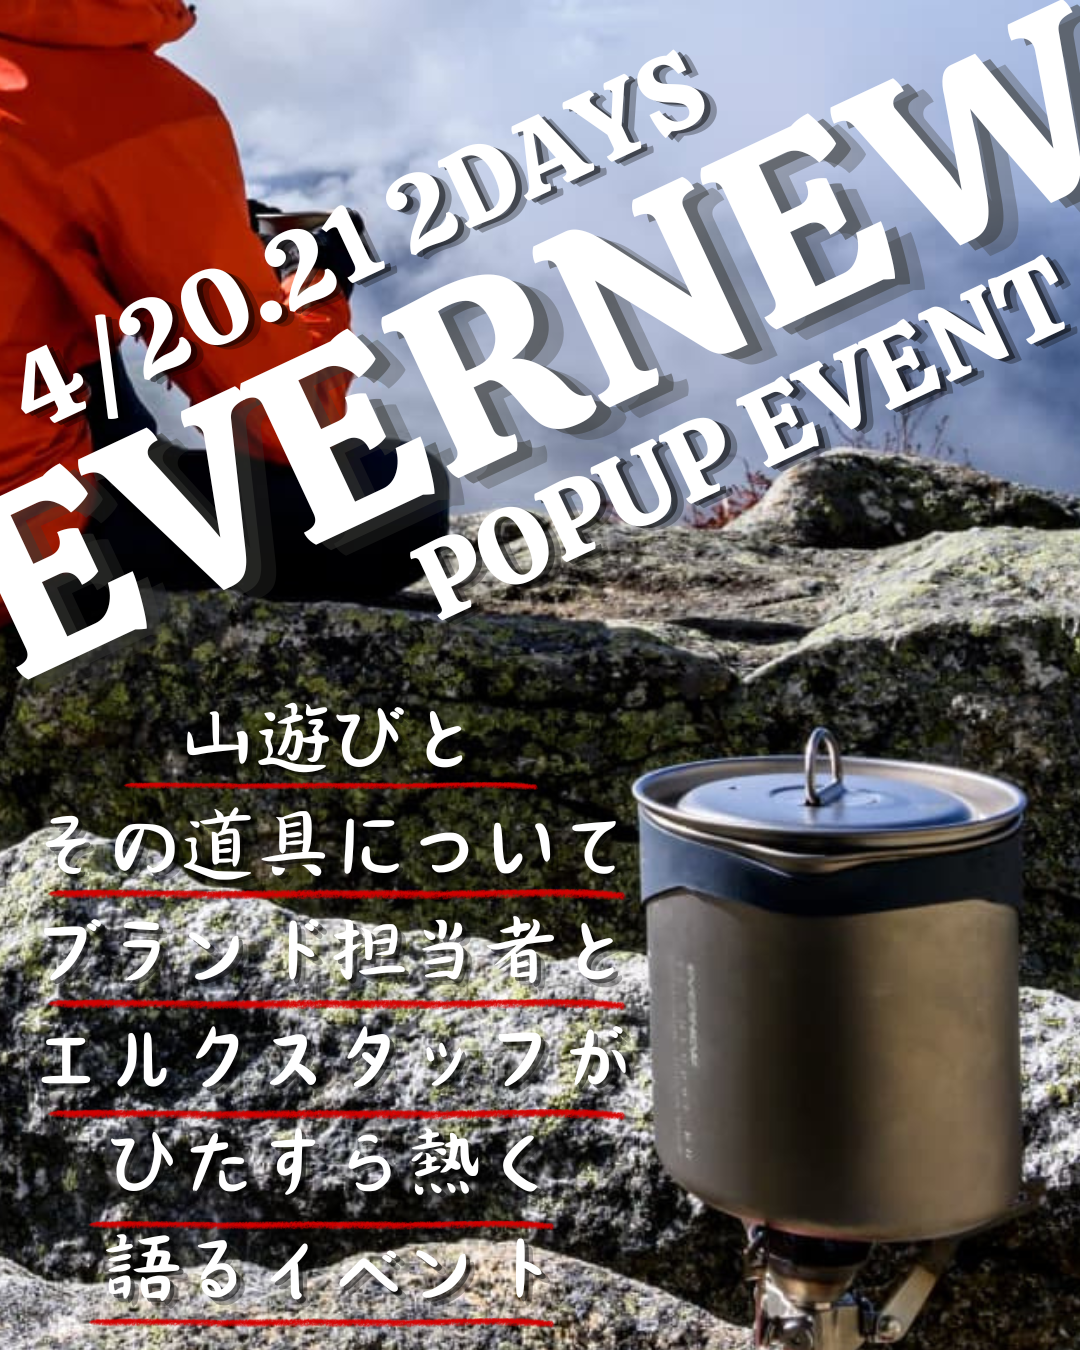 【EVERNEW】4/20,21二日間限定!!ポップアップイベントを開催